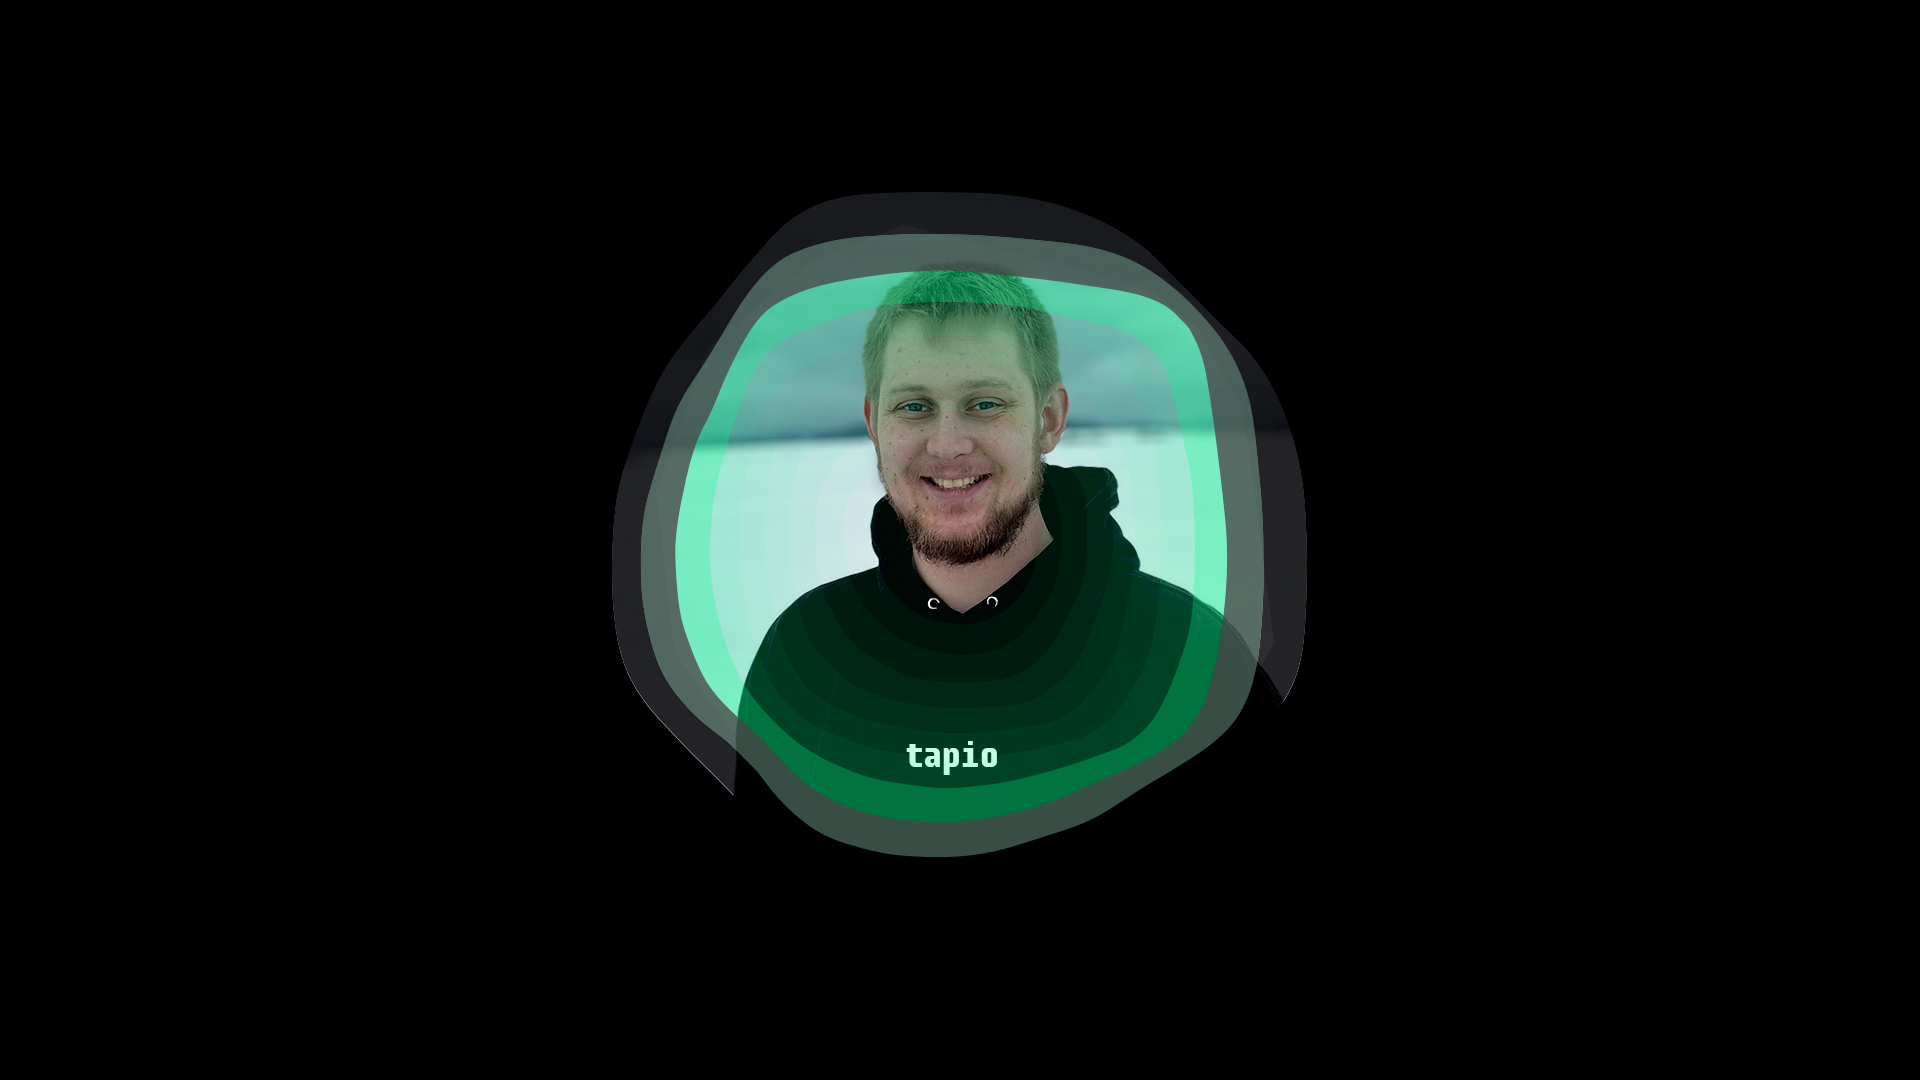 Simon-software-developer-tapio-team